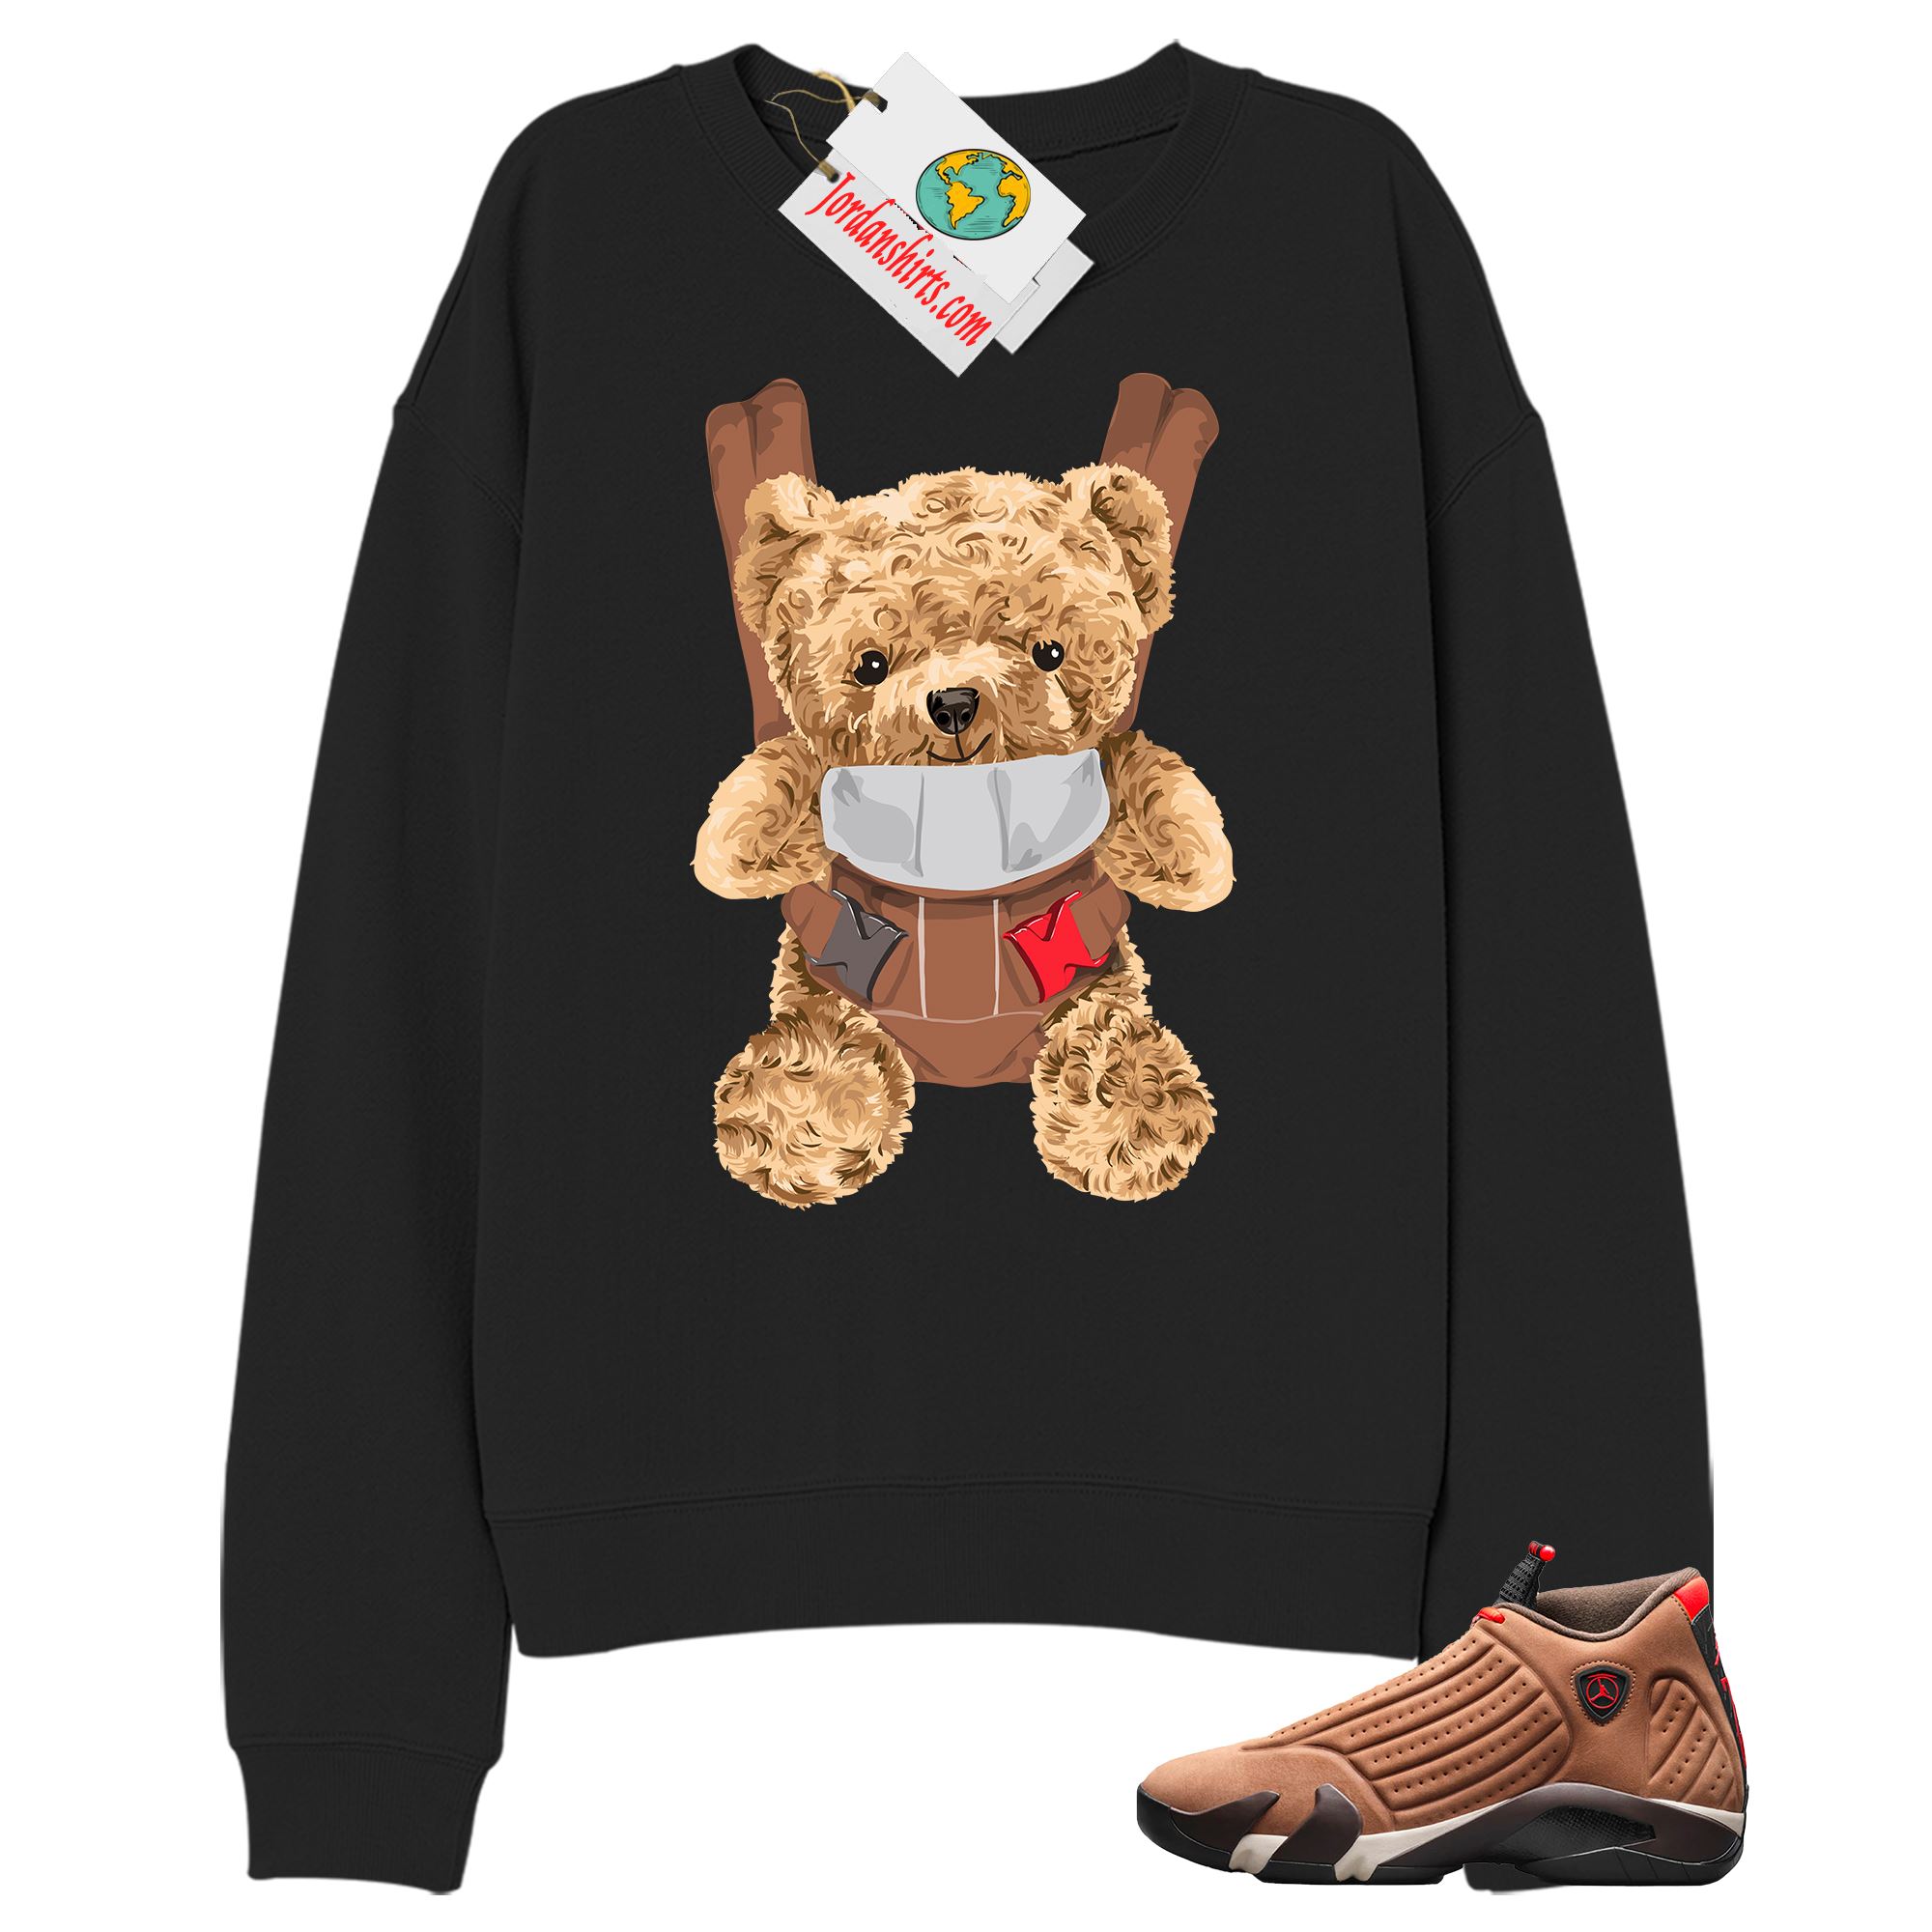 Jordan 14 Sweatshirt, Teddy Bear Bag Black Sweatshirt Air Jordan 14 Winterized 14s Plus Size Up To 5xl